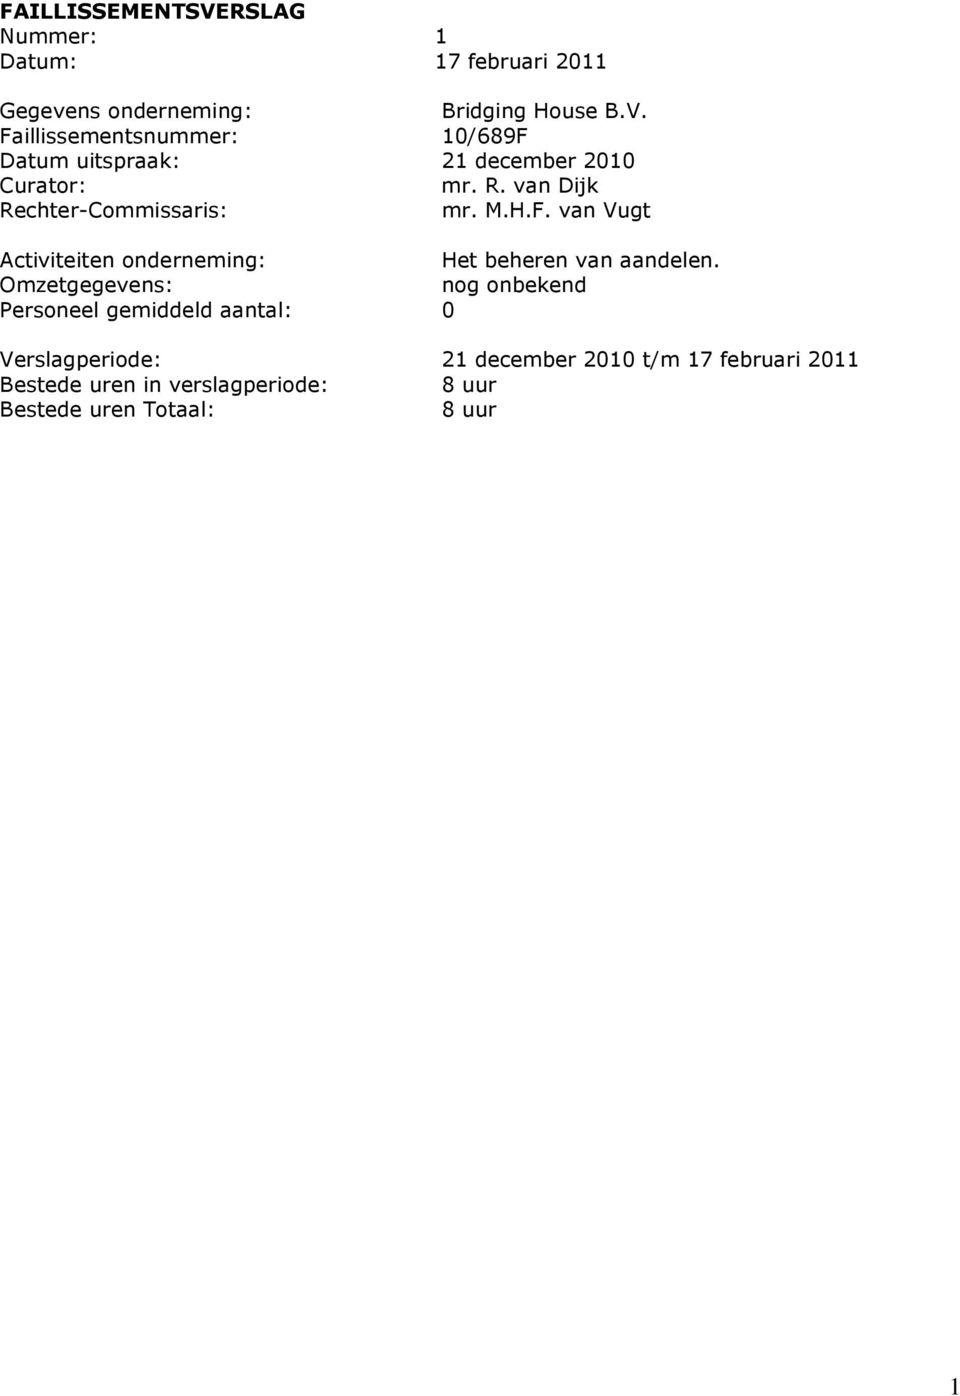 Omzetgegevens: nog onbekend Personeel gemiddeld aantal: 0 Verslagperiode: 21 december 2010 t/m 17 februari 2011